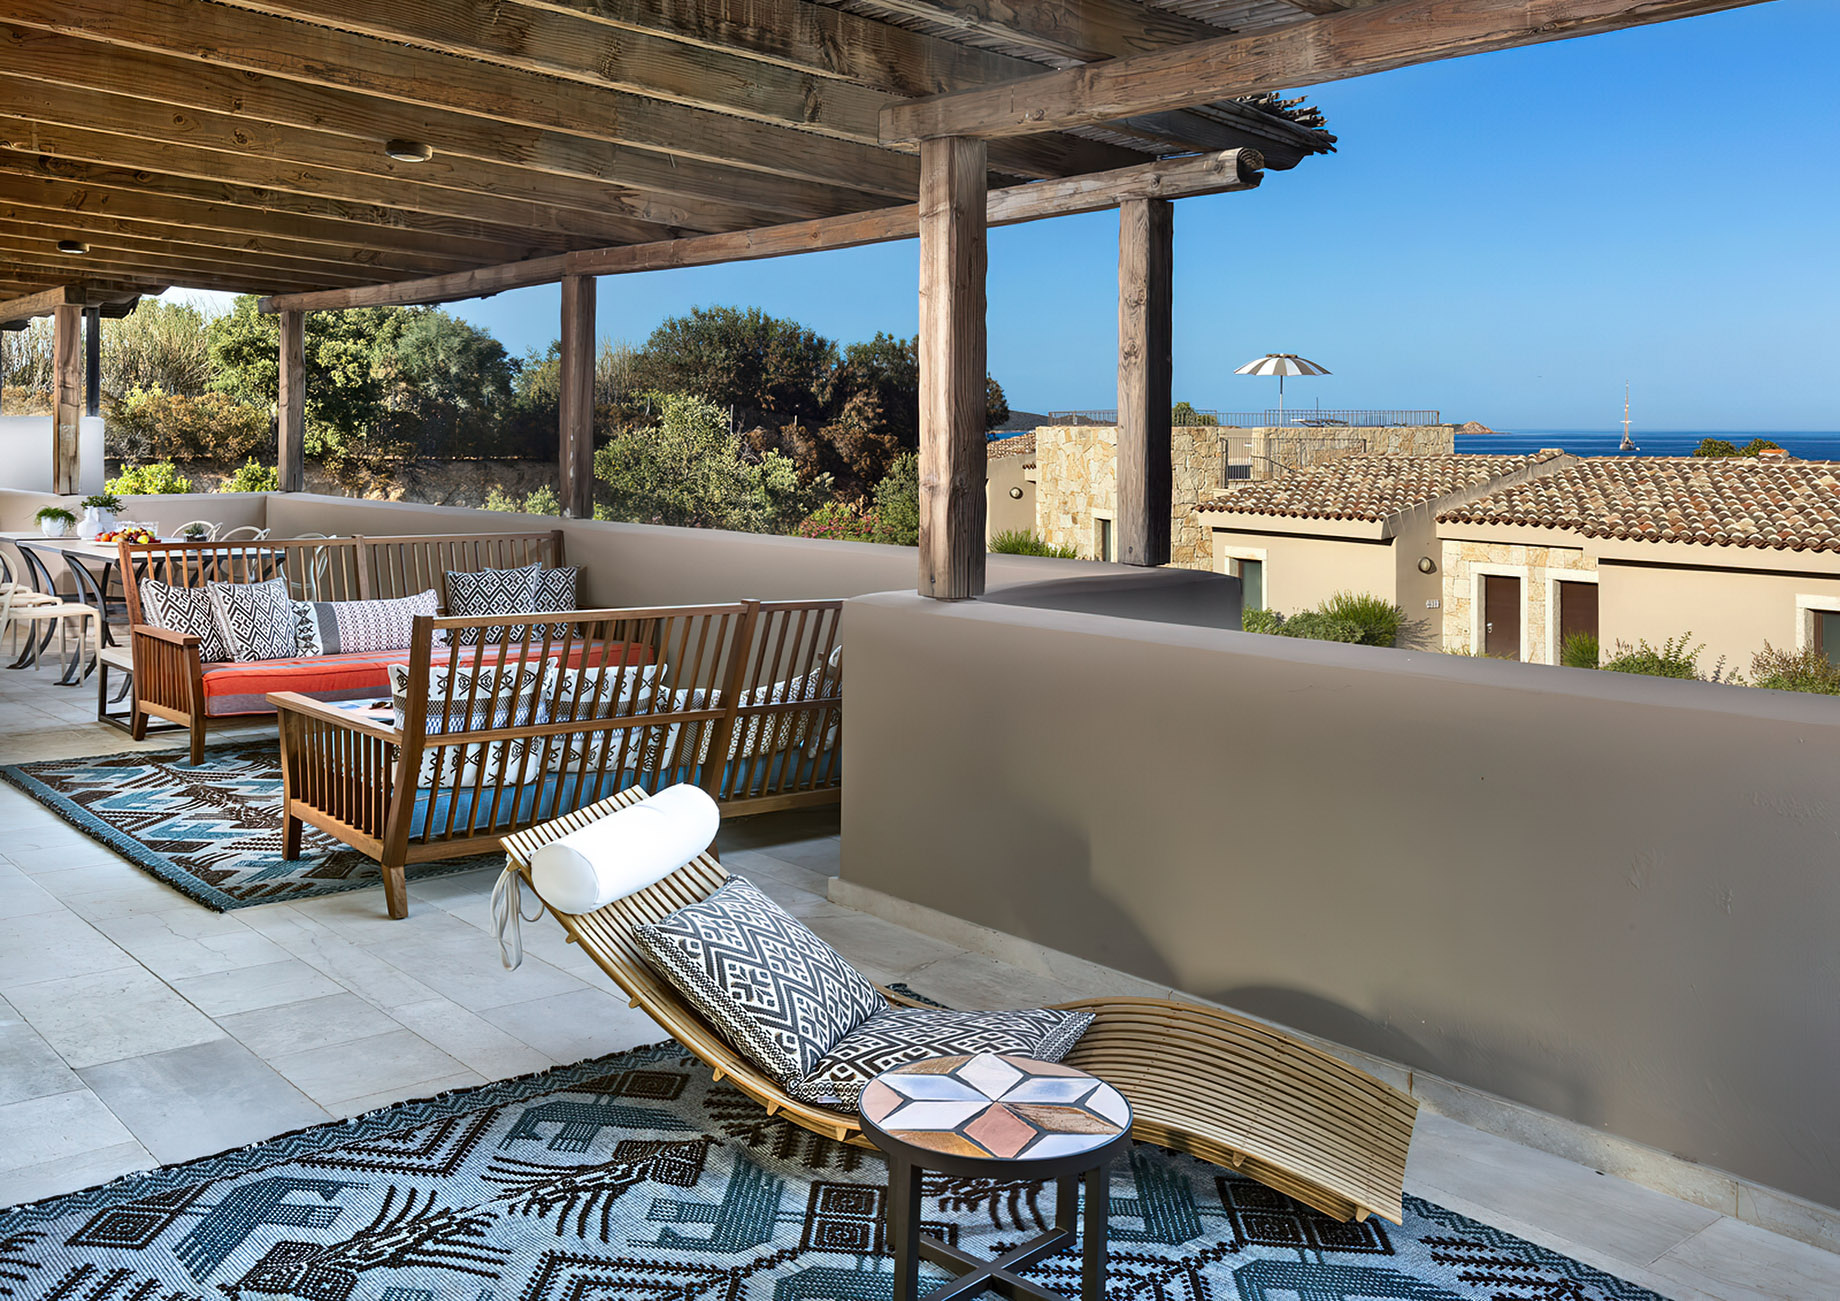 Baglioni Resort Sardinia – San Teodoro, Sardegna, Italy – Tavolara Suite Terrace